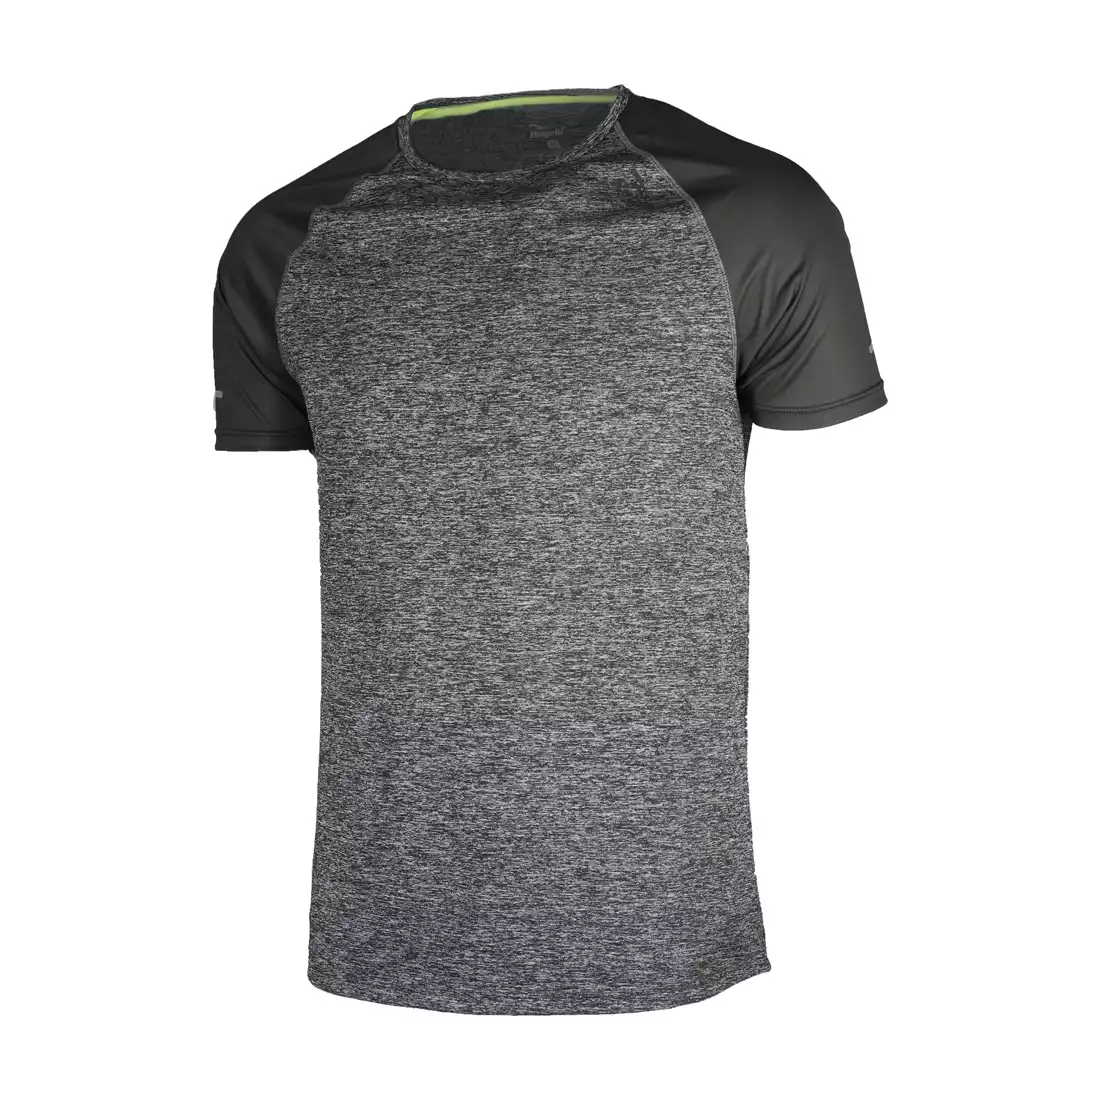 ROGELLI RUN BALATON 830.237 - męska koszulka do biegania, kolor: szaro-fluorowy